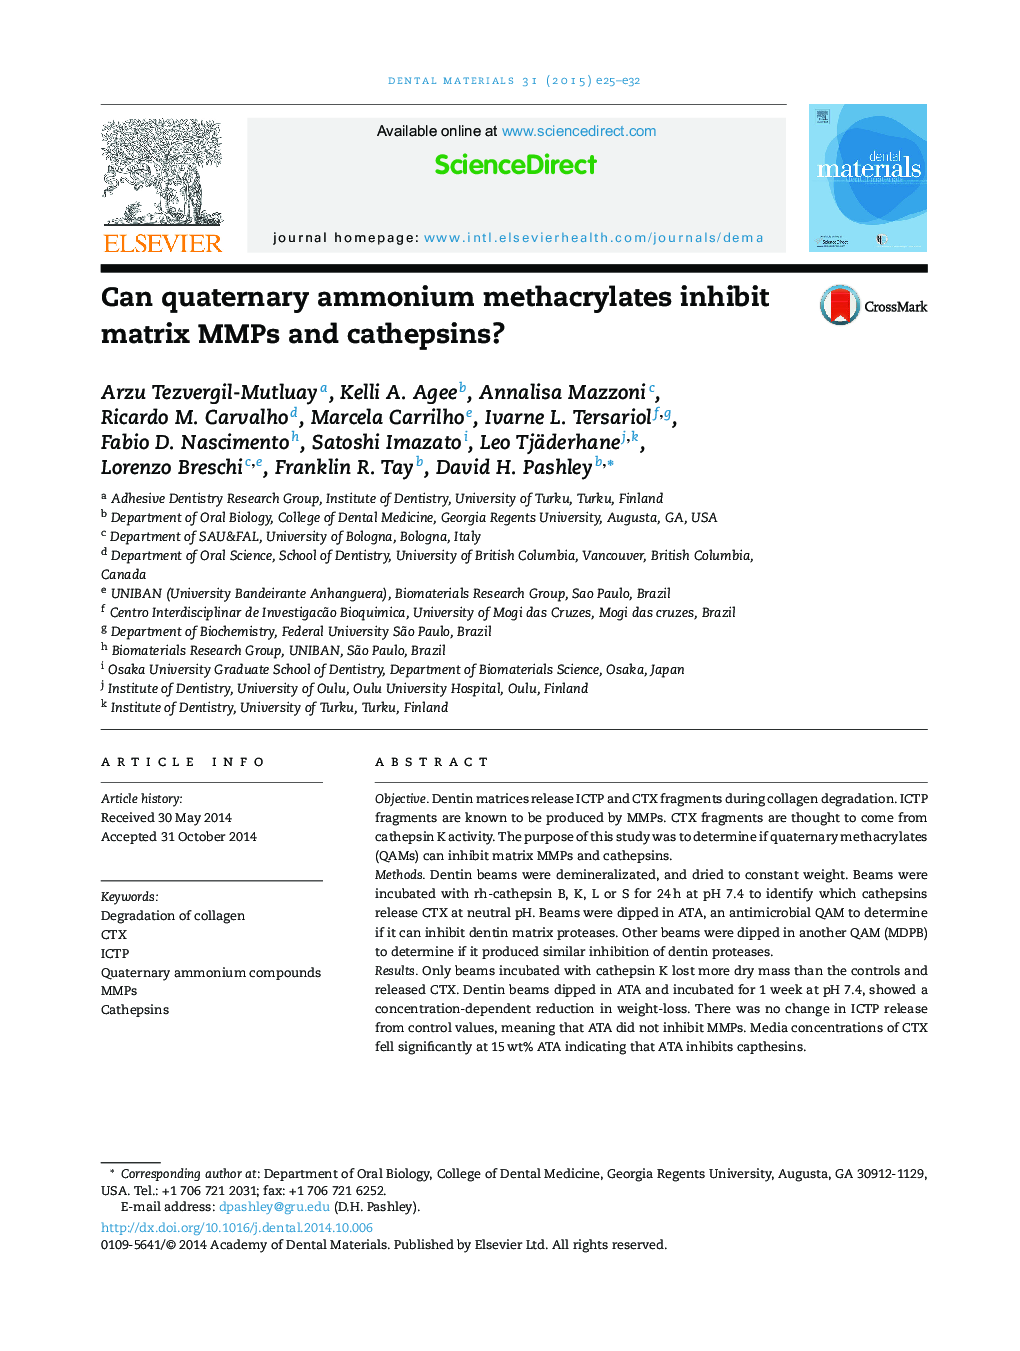 Can quaternary ammonium methacrylates inhibit matrix MMPs and cathepsins?